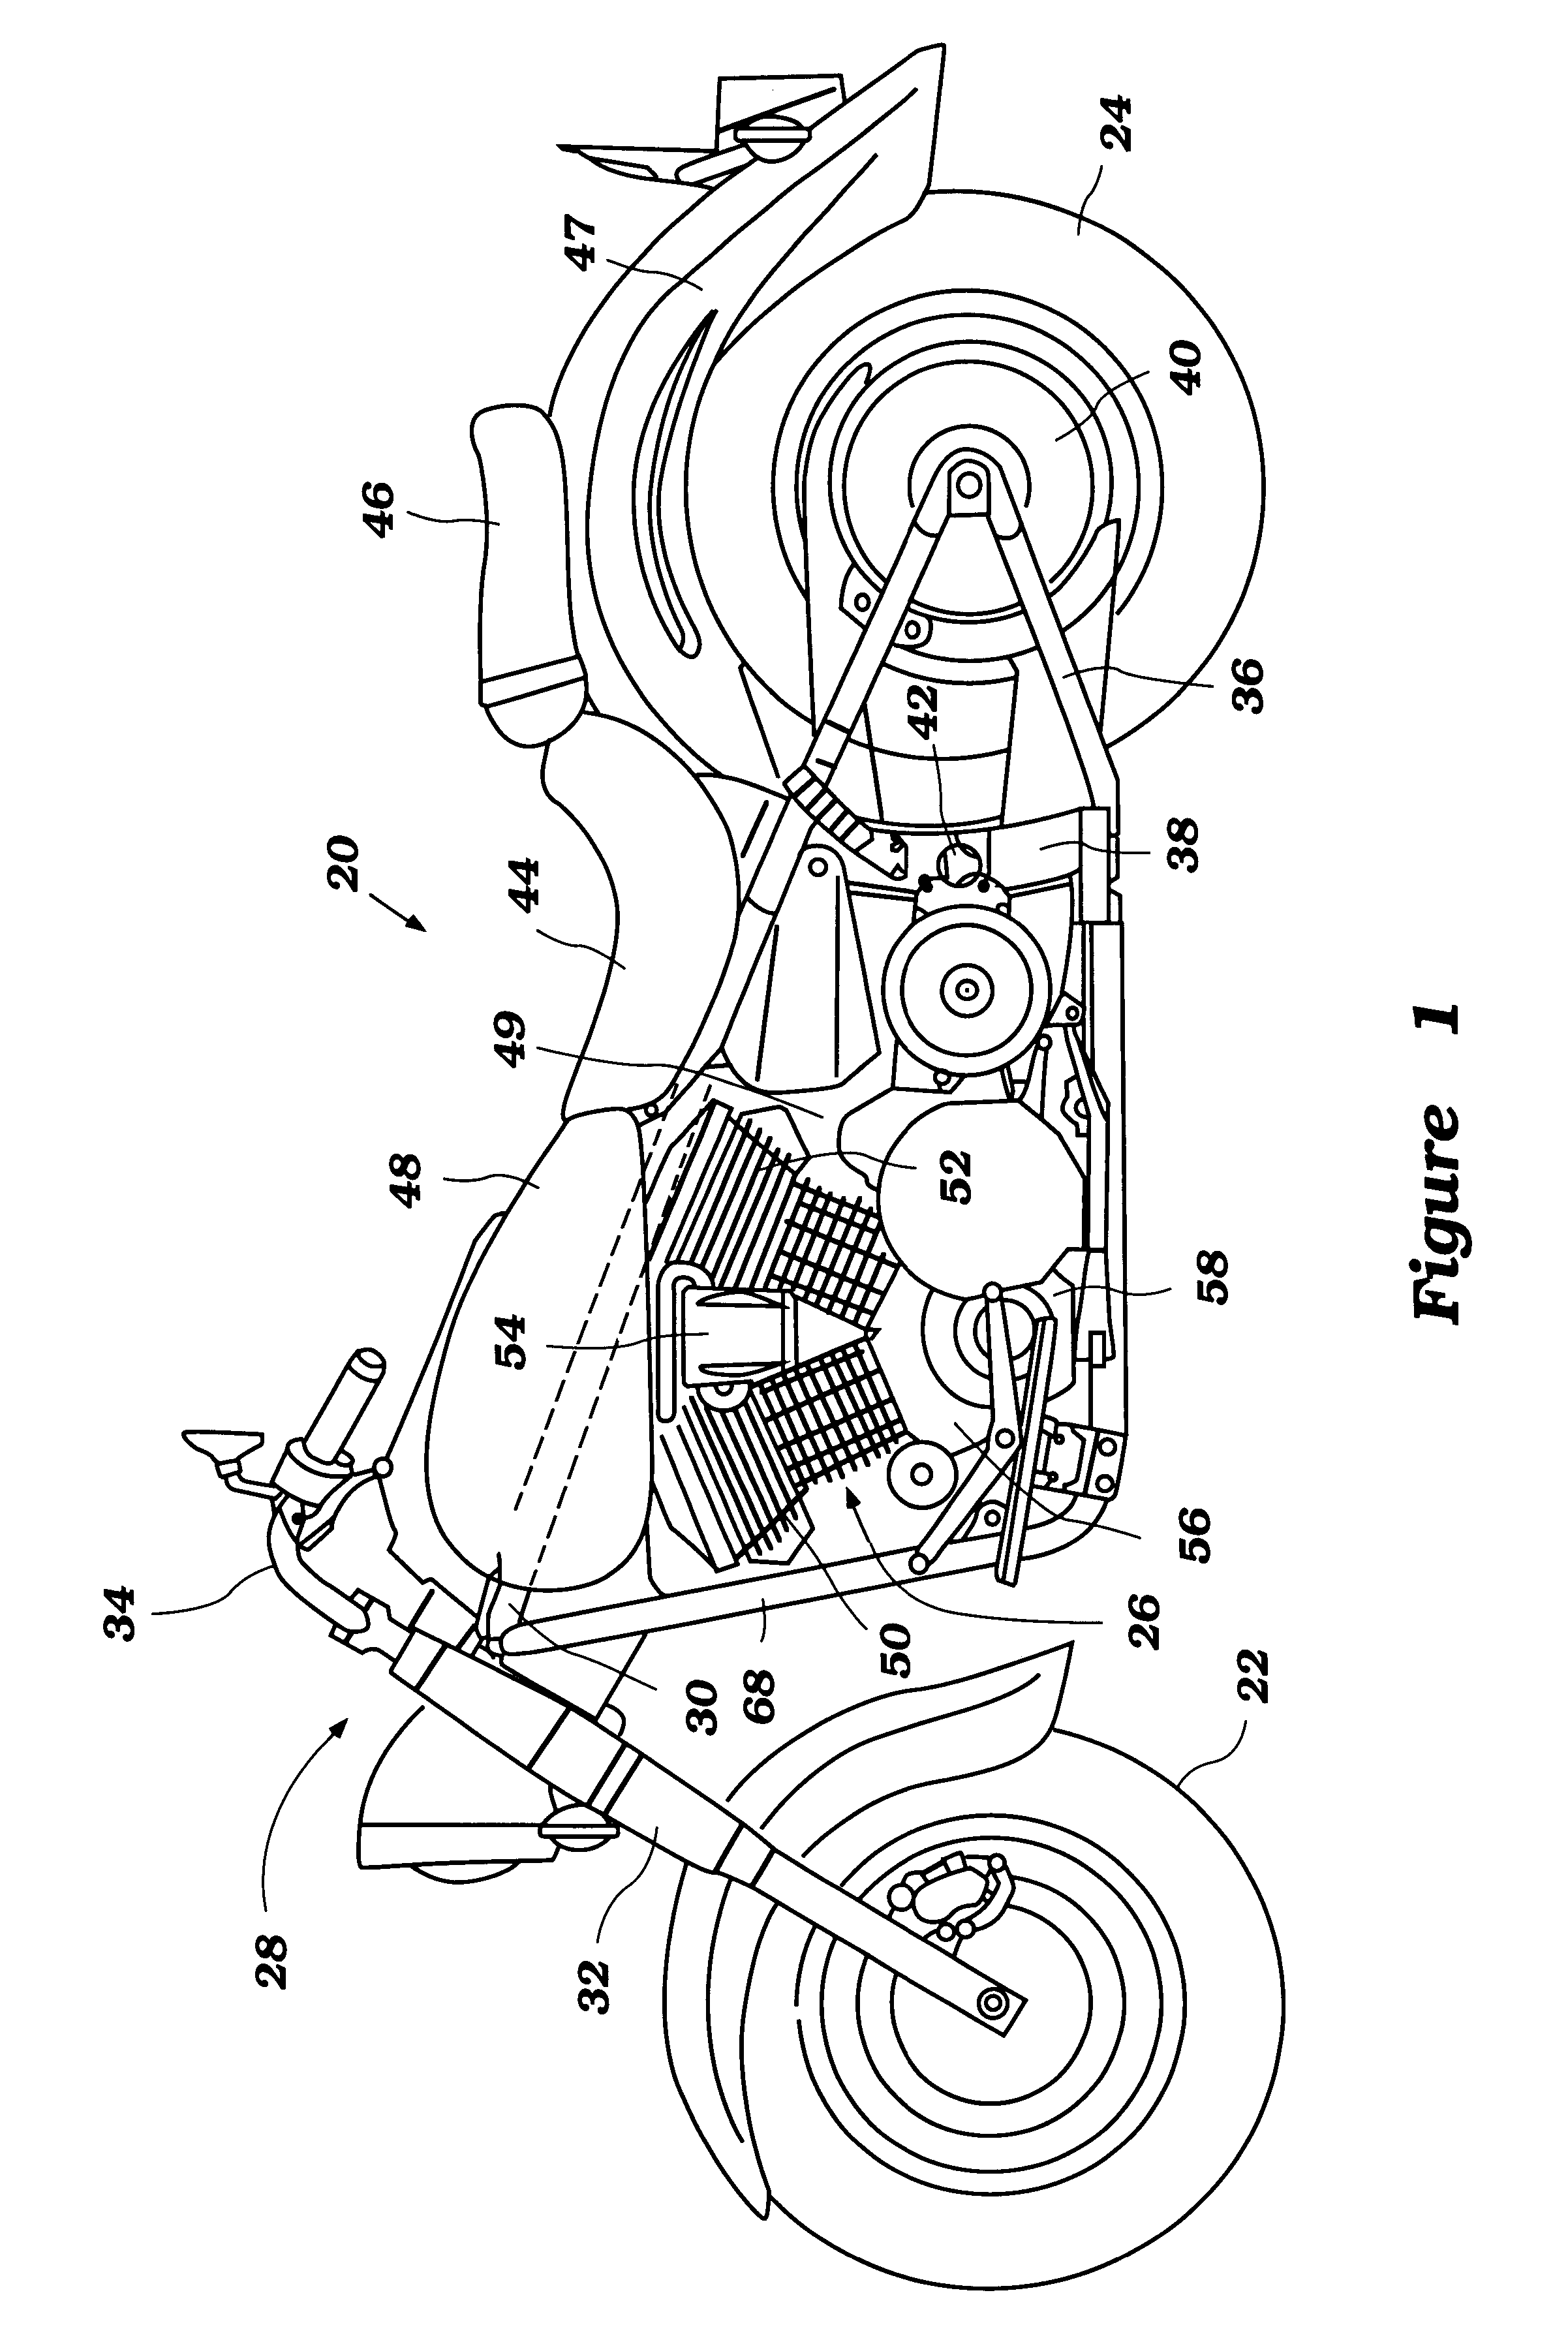 Locking arrangement for motorcycle